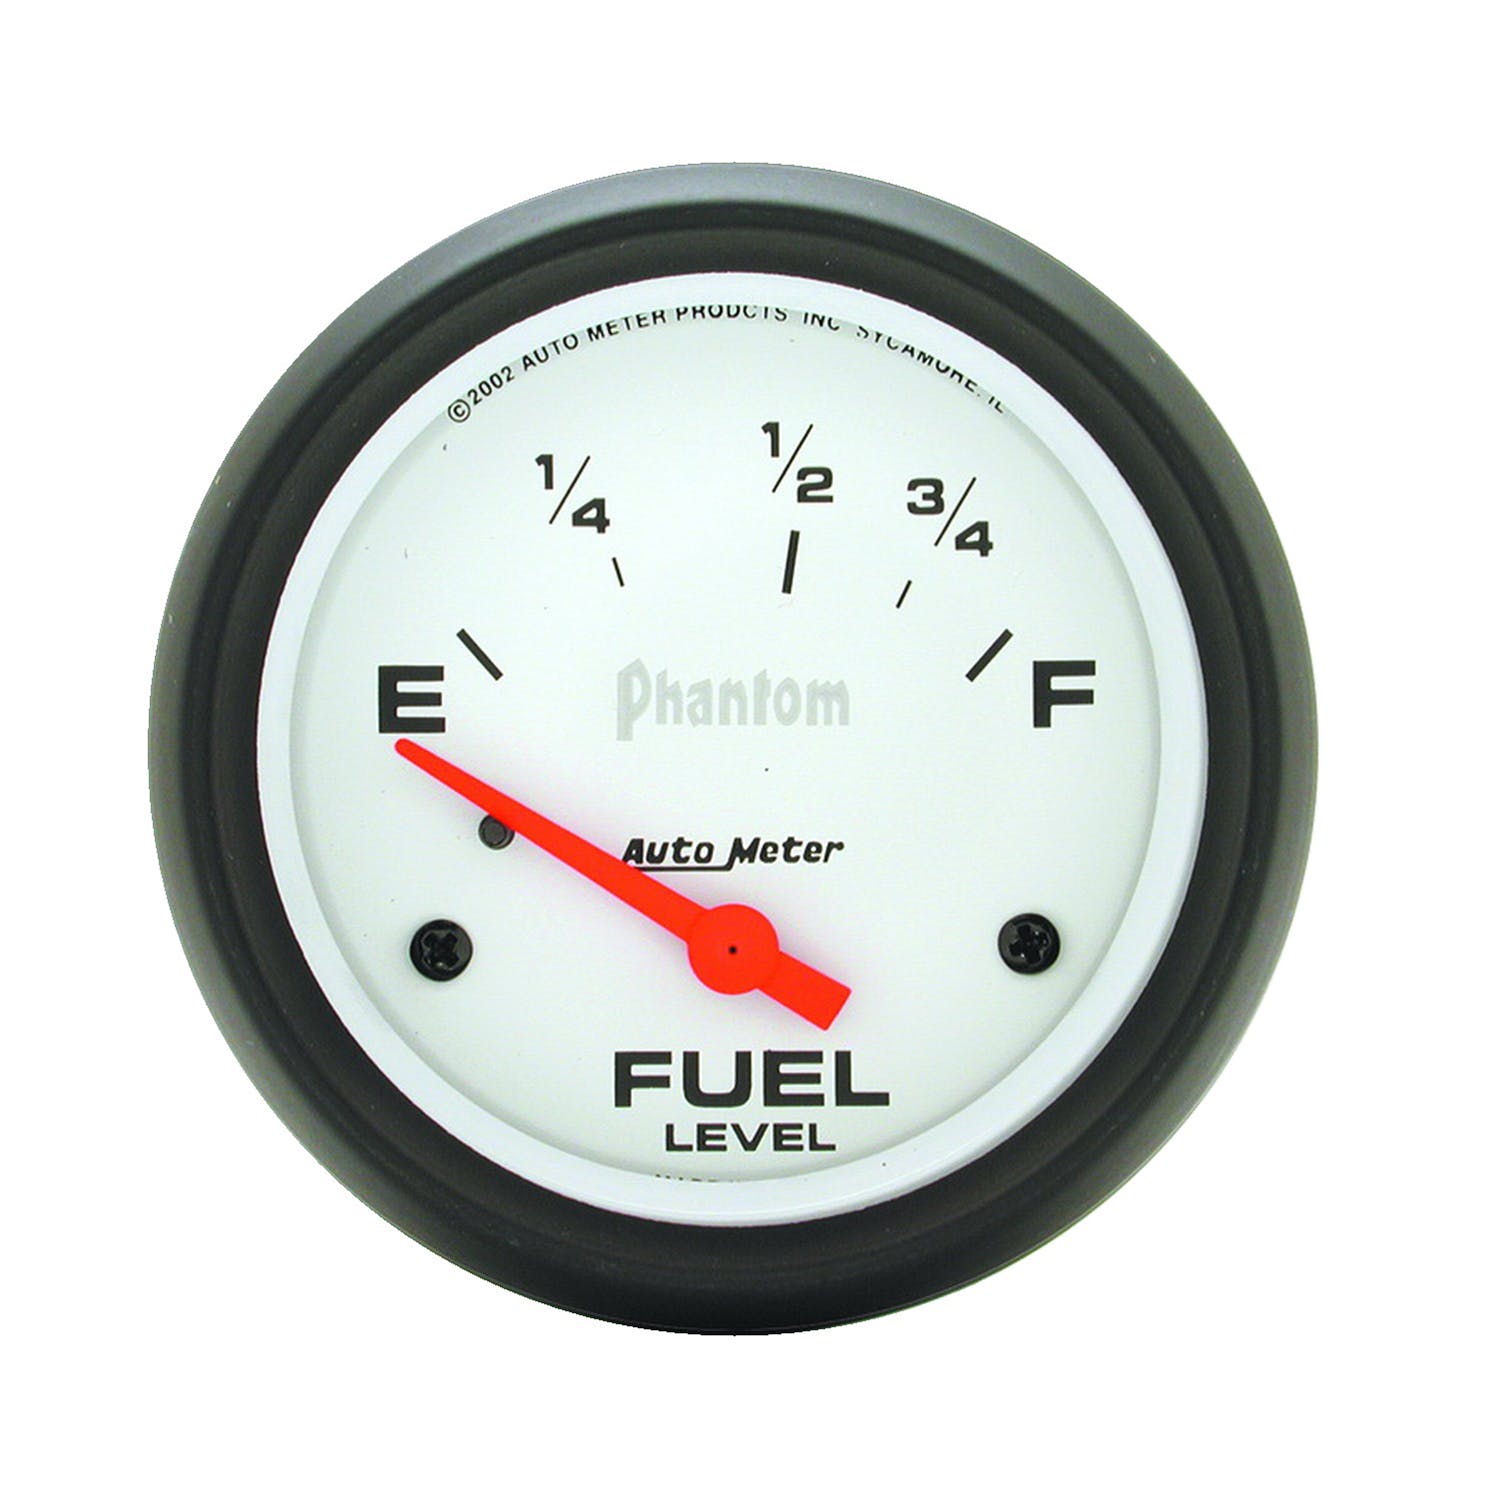 AutoMeter Products 5815 Fuel Level Gauge 73 E/8-12 F